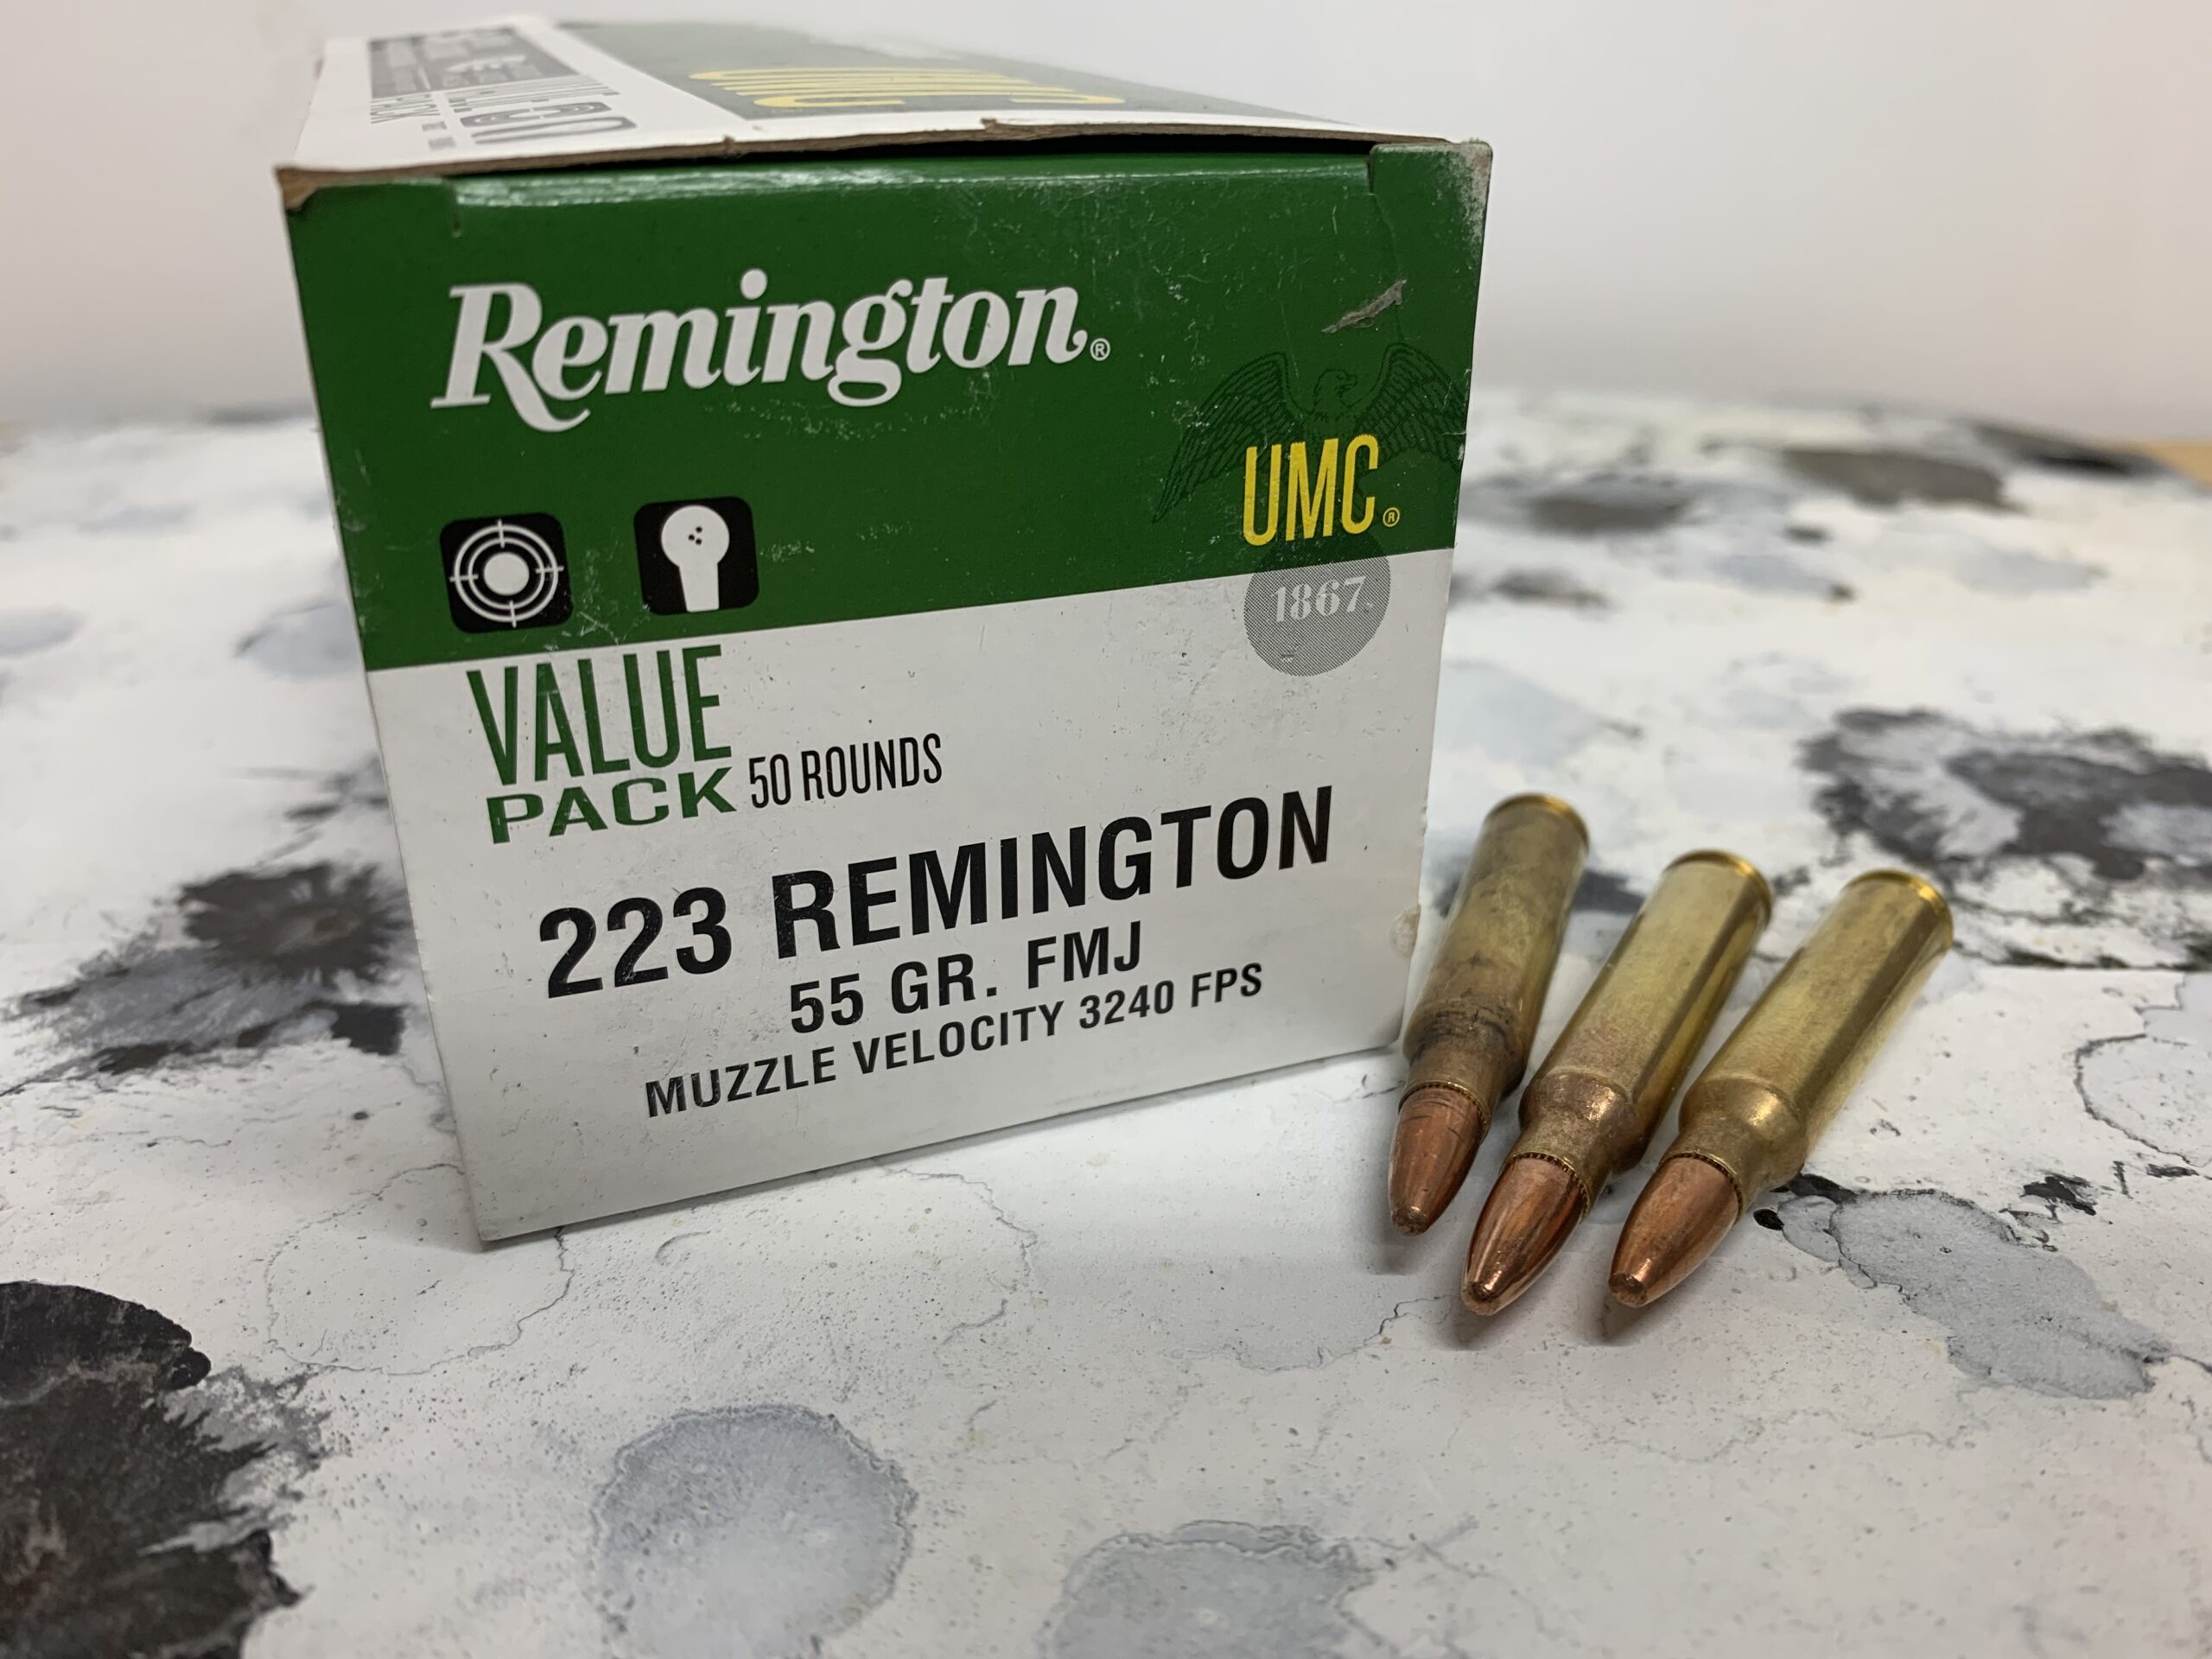 Remington UMC 55gn fmj 5.56 bulk ammo